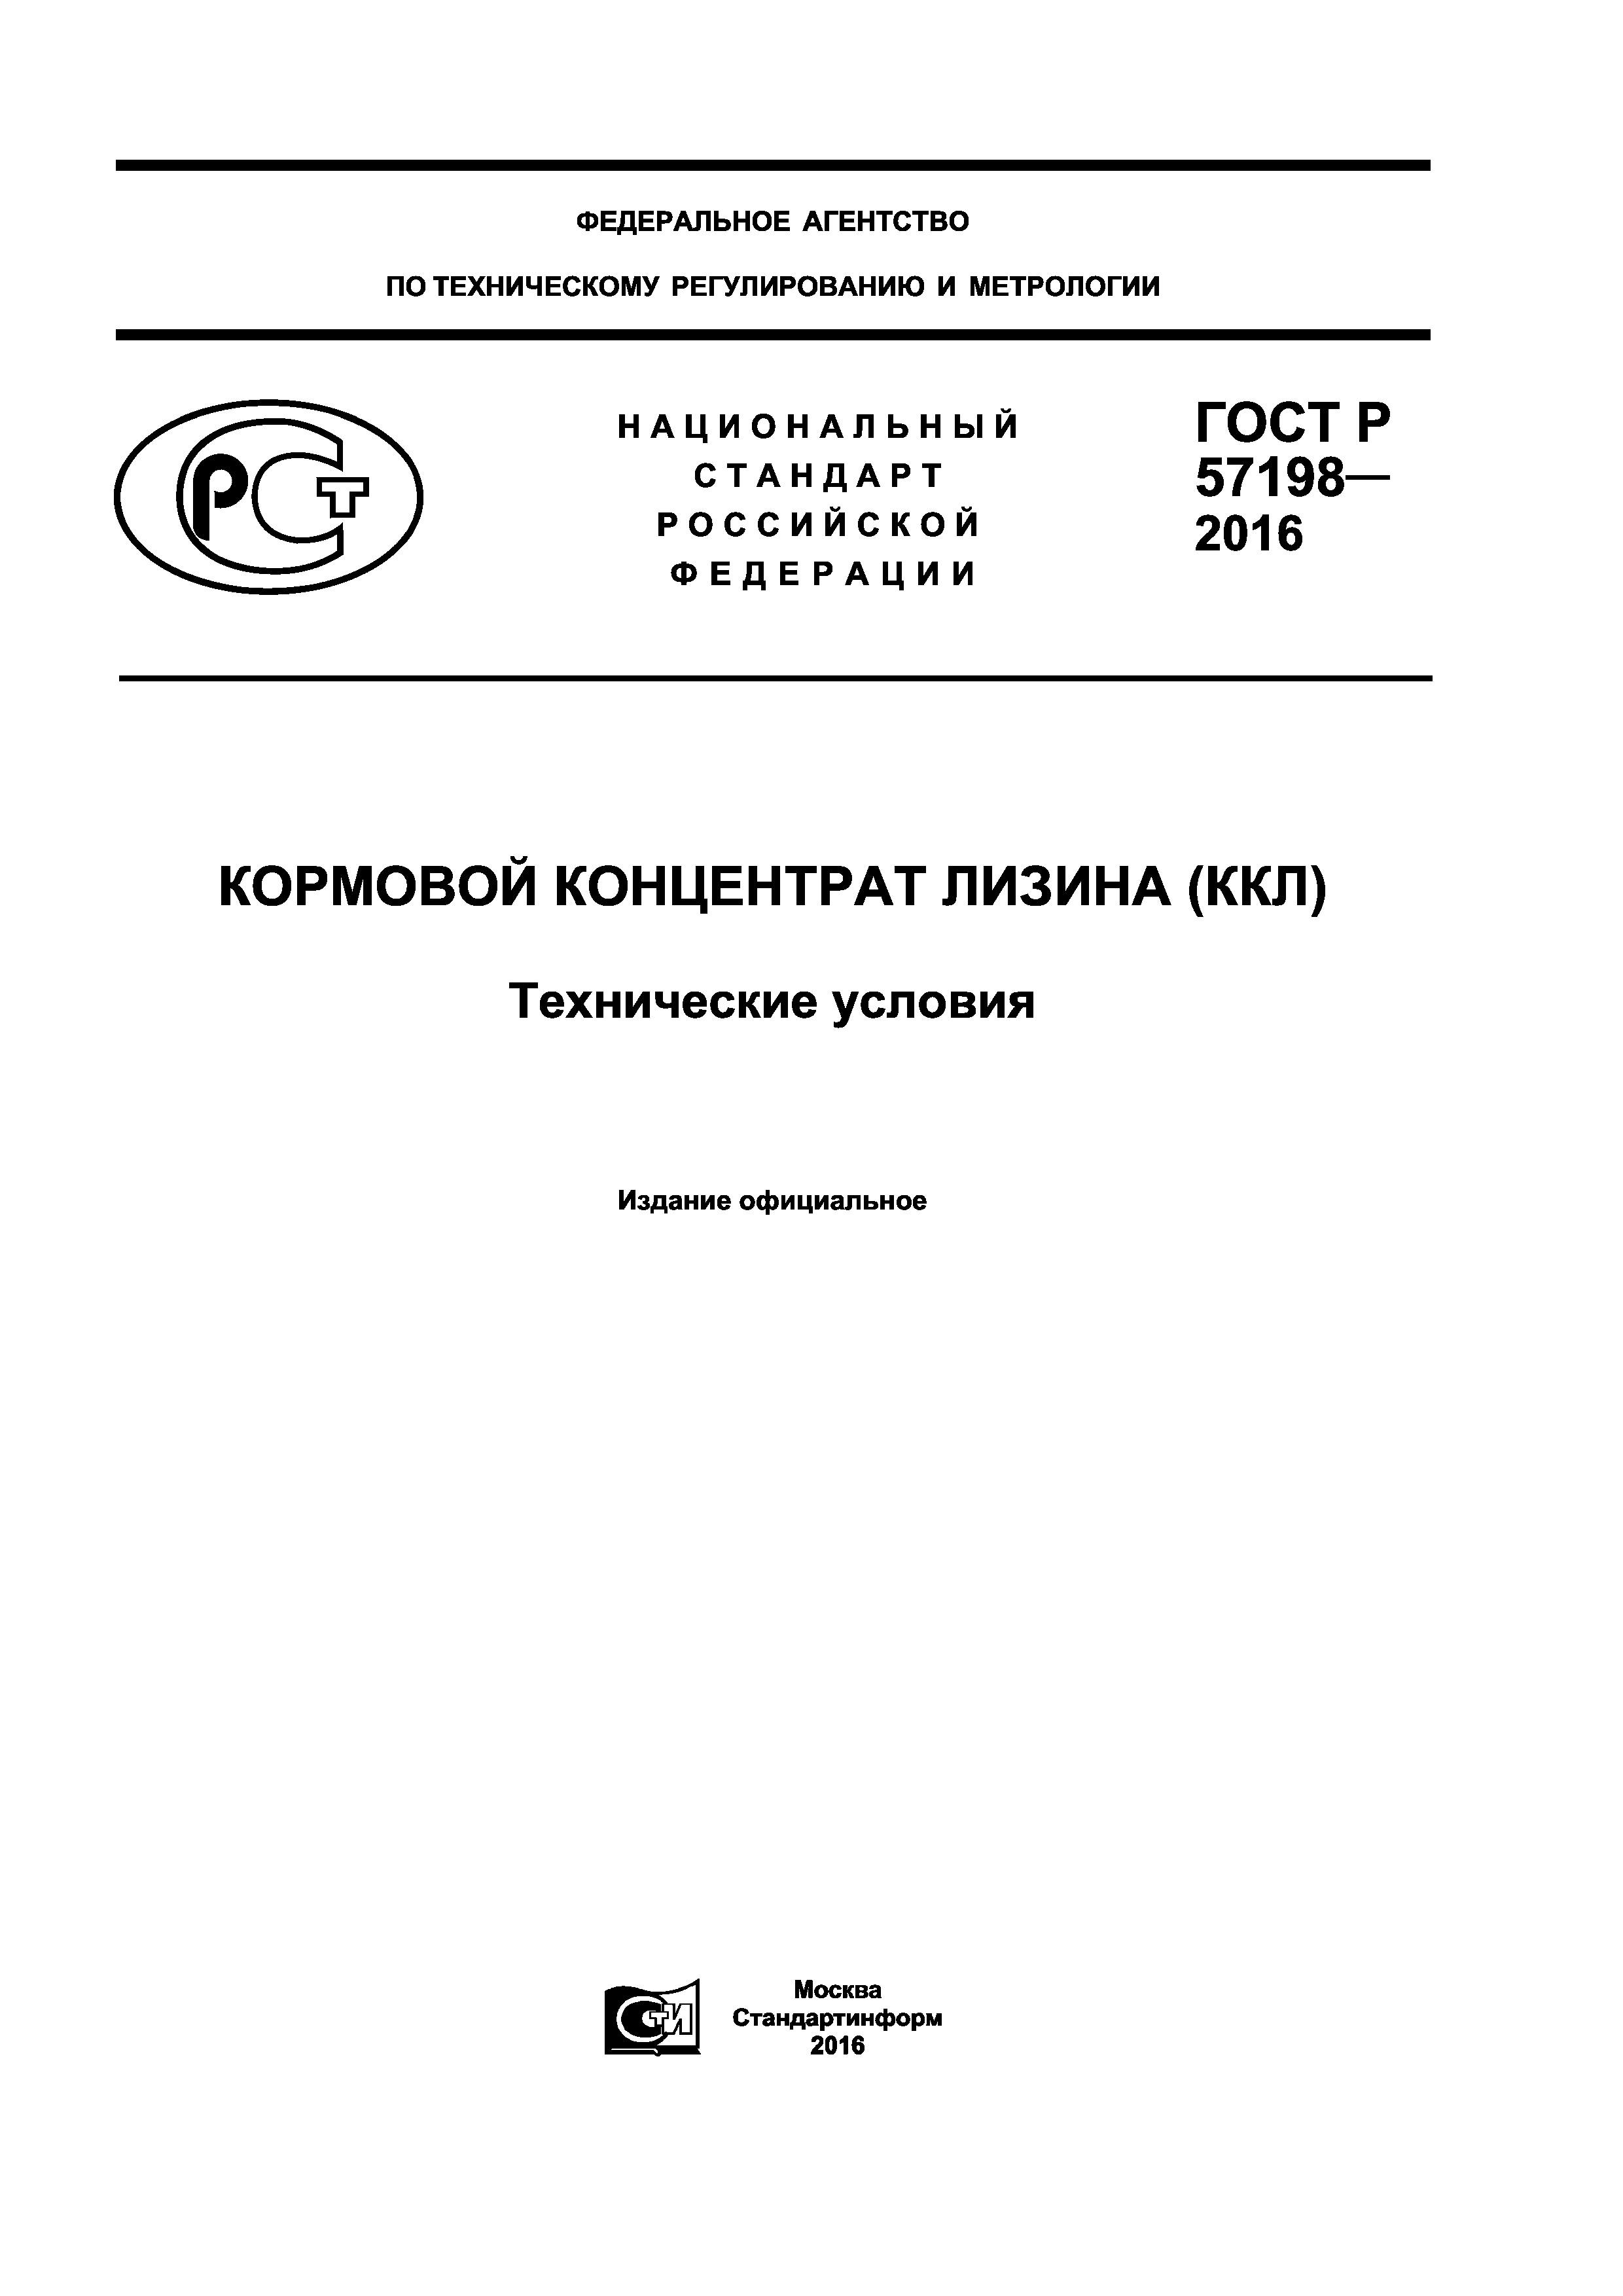 ГОСТ Р 57198-2016